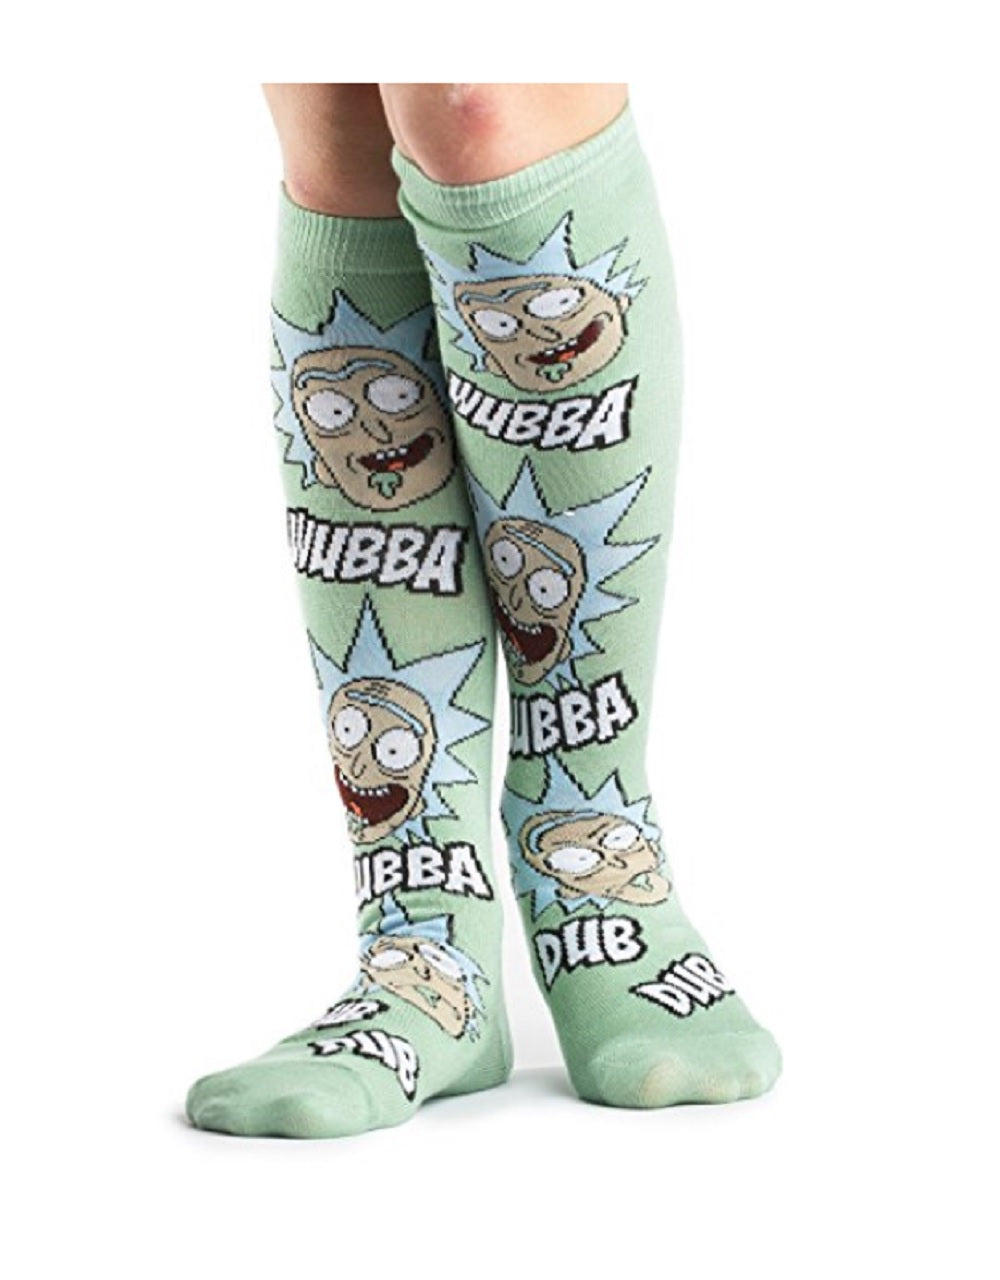 Rick And Morty Wubba Lubba Dub Dub Adult Knee High Socks